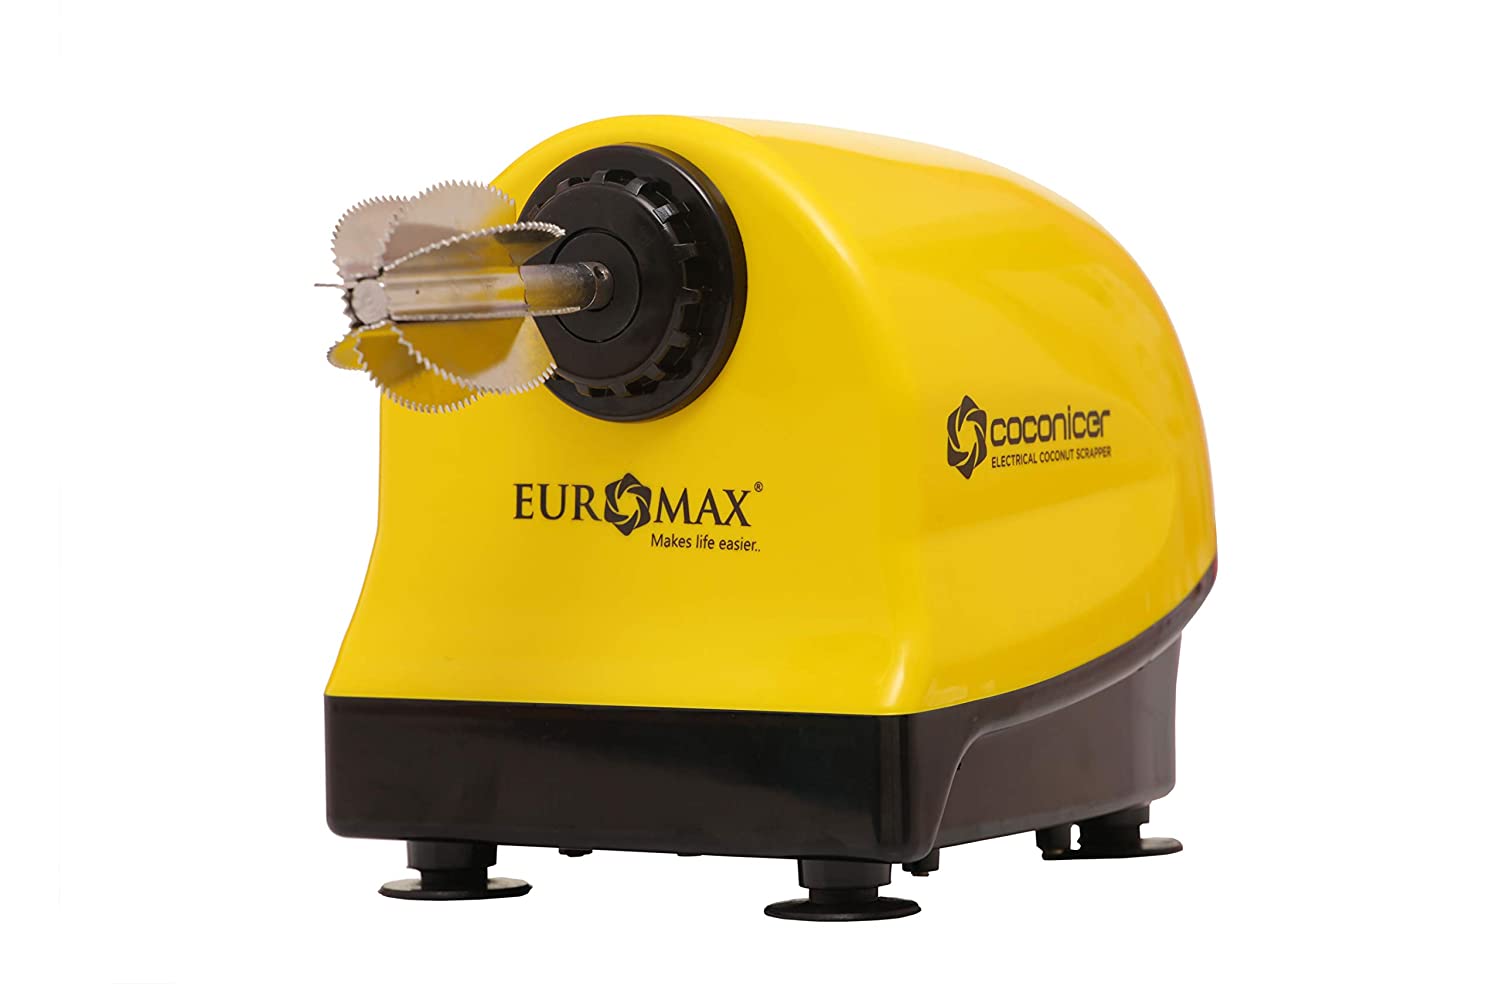 Euromax Electric Coconut Scrapper Coconicer Domestic 100 watts - KITCHEN MART